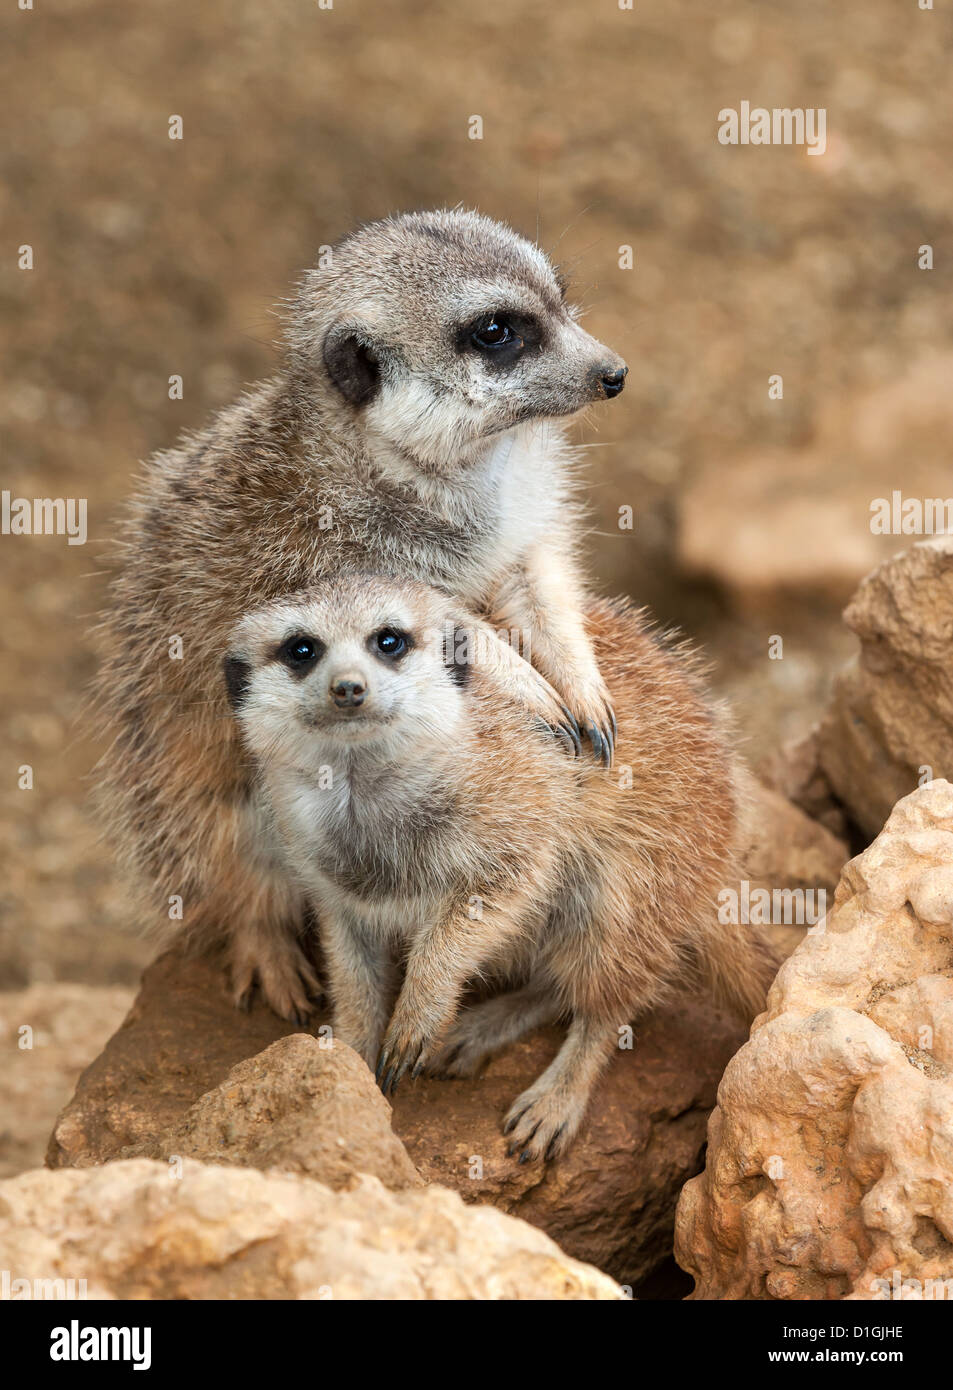 Two Meerkats on Guard Duty Stock Photo